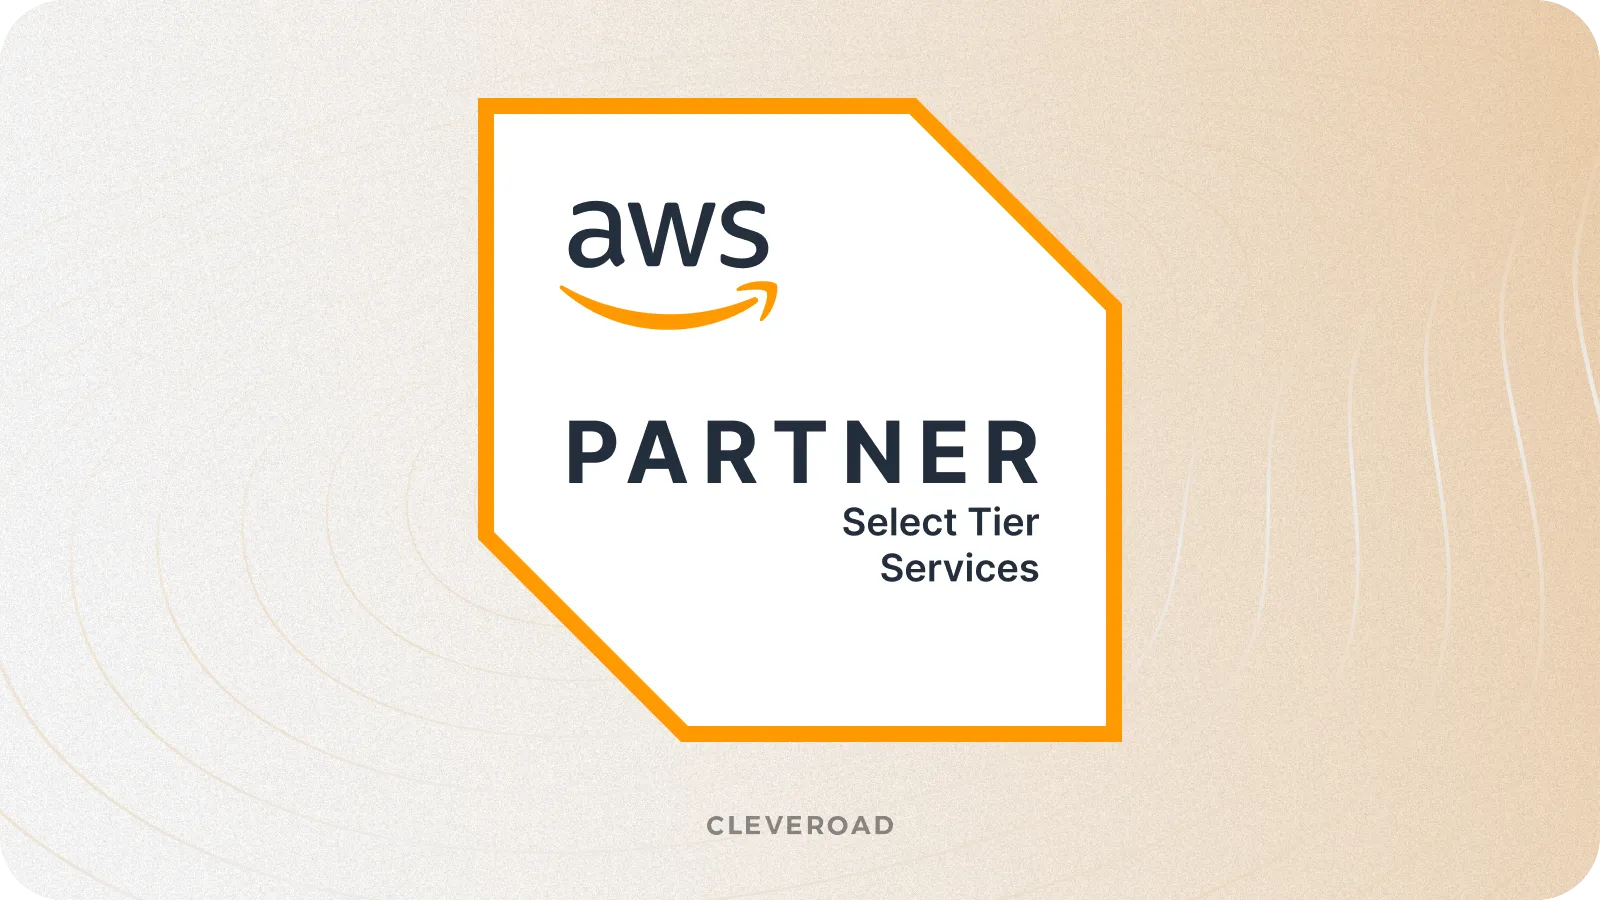 Cleveroad got AWS Select Tier Partner Status